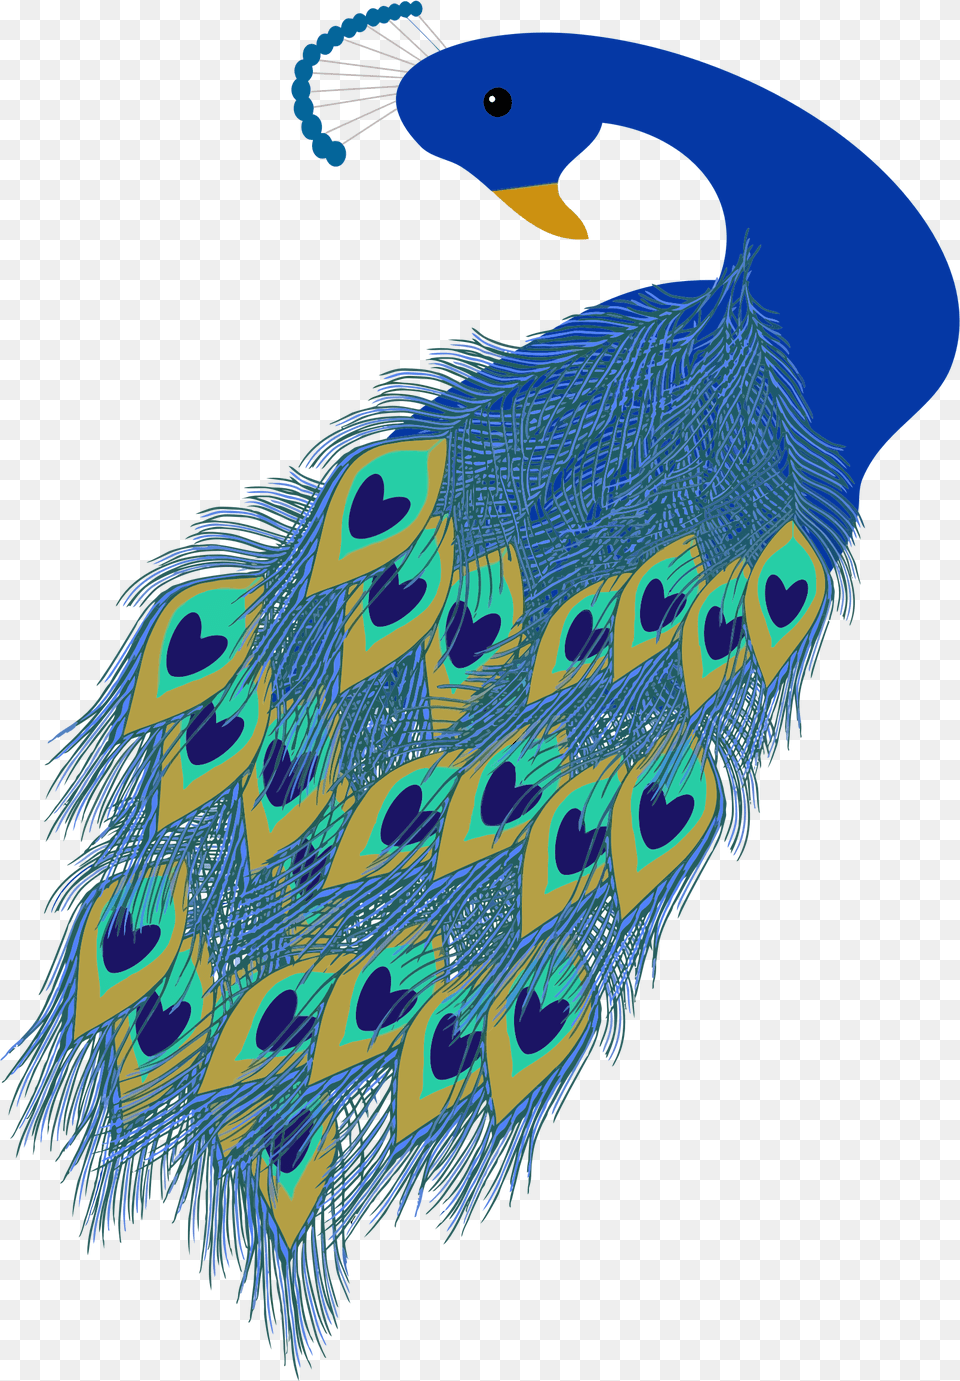 This Free Icons Design Of Peacock Illustration, Animal, Fish, Sea Life, Bird Png Image